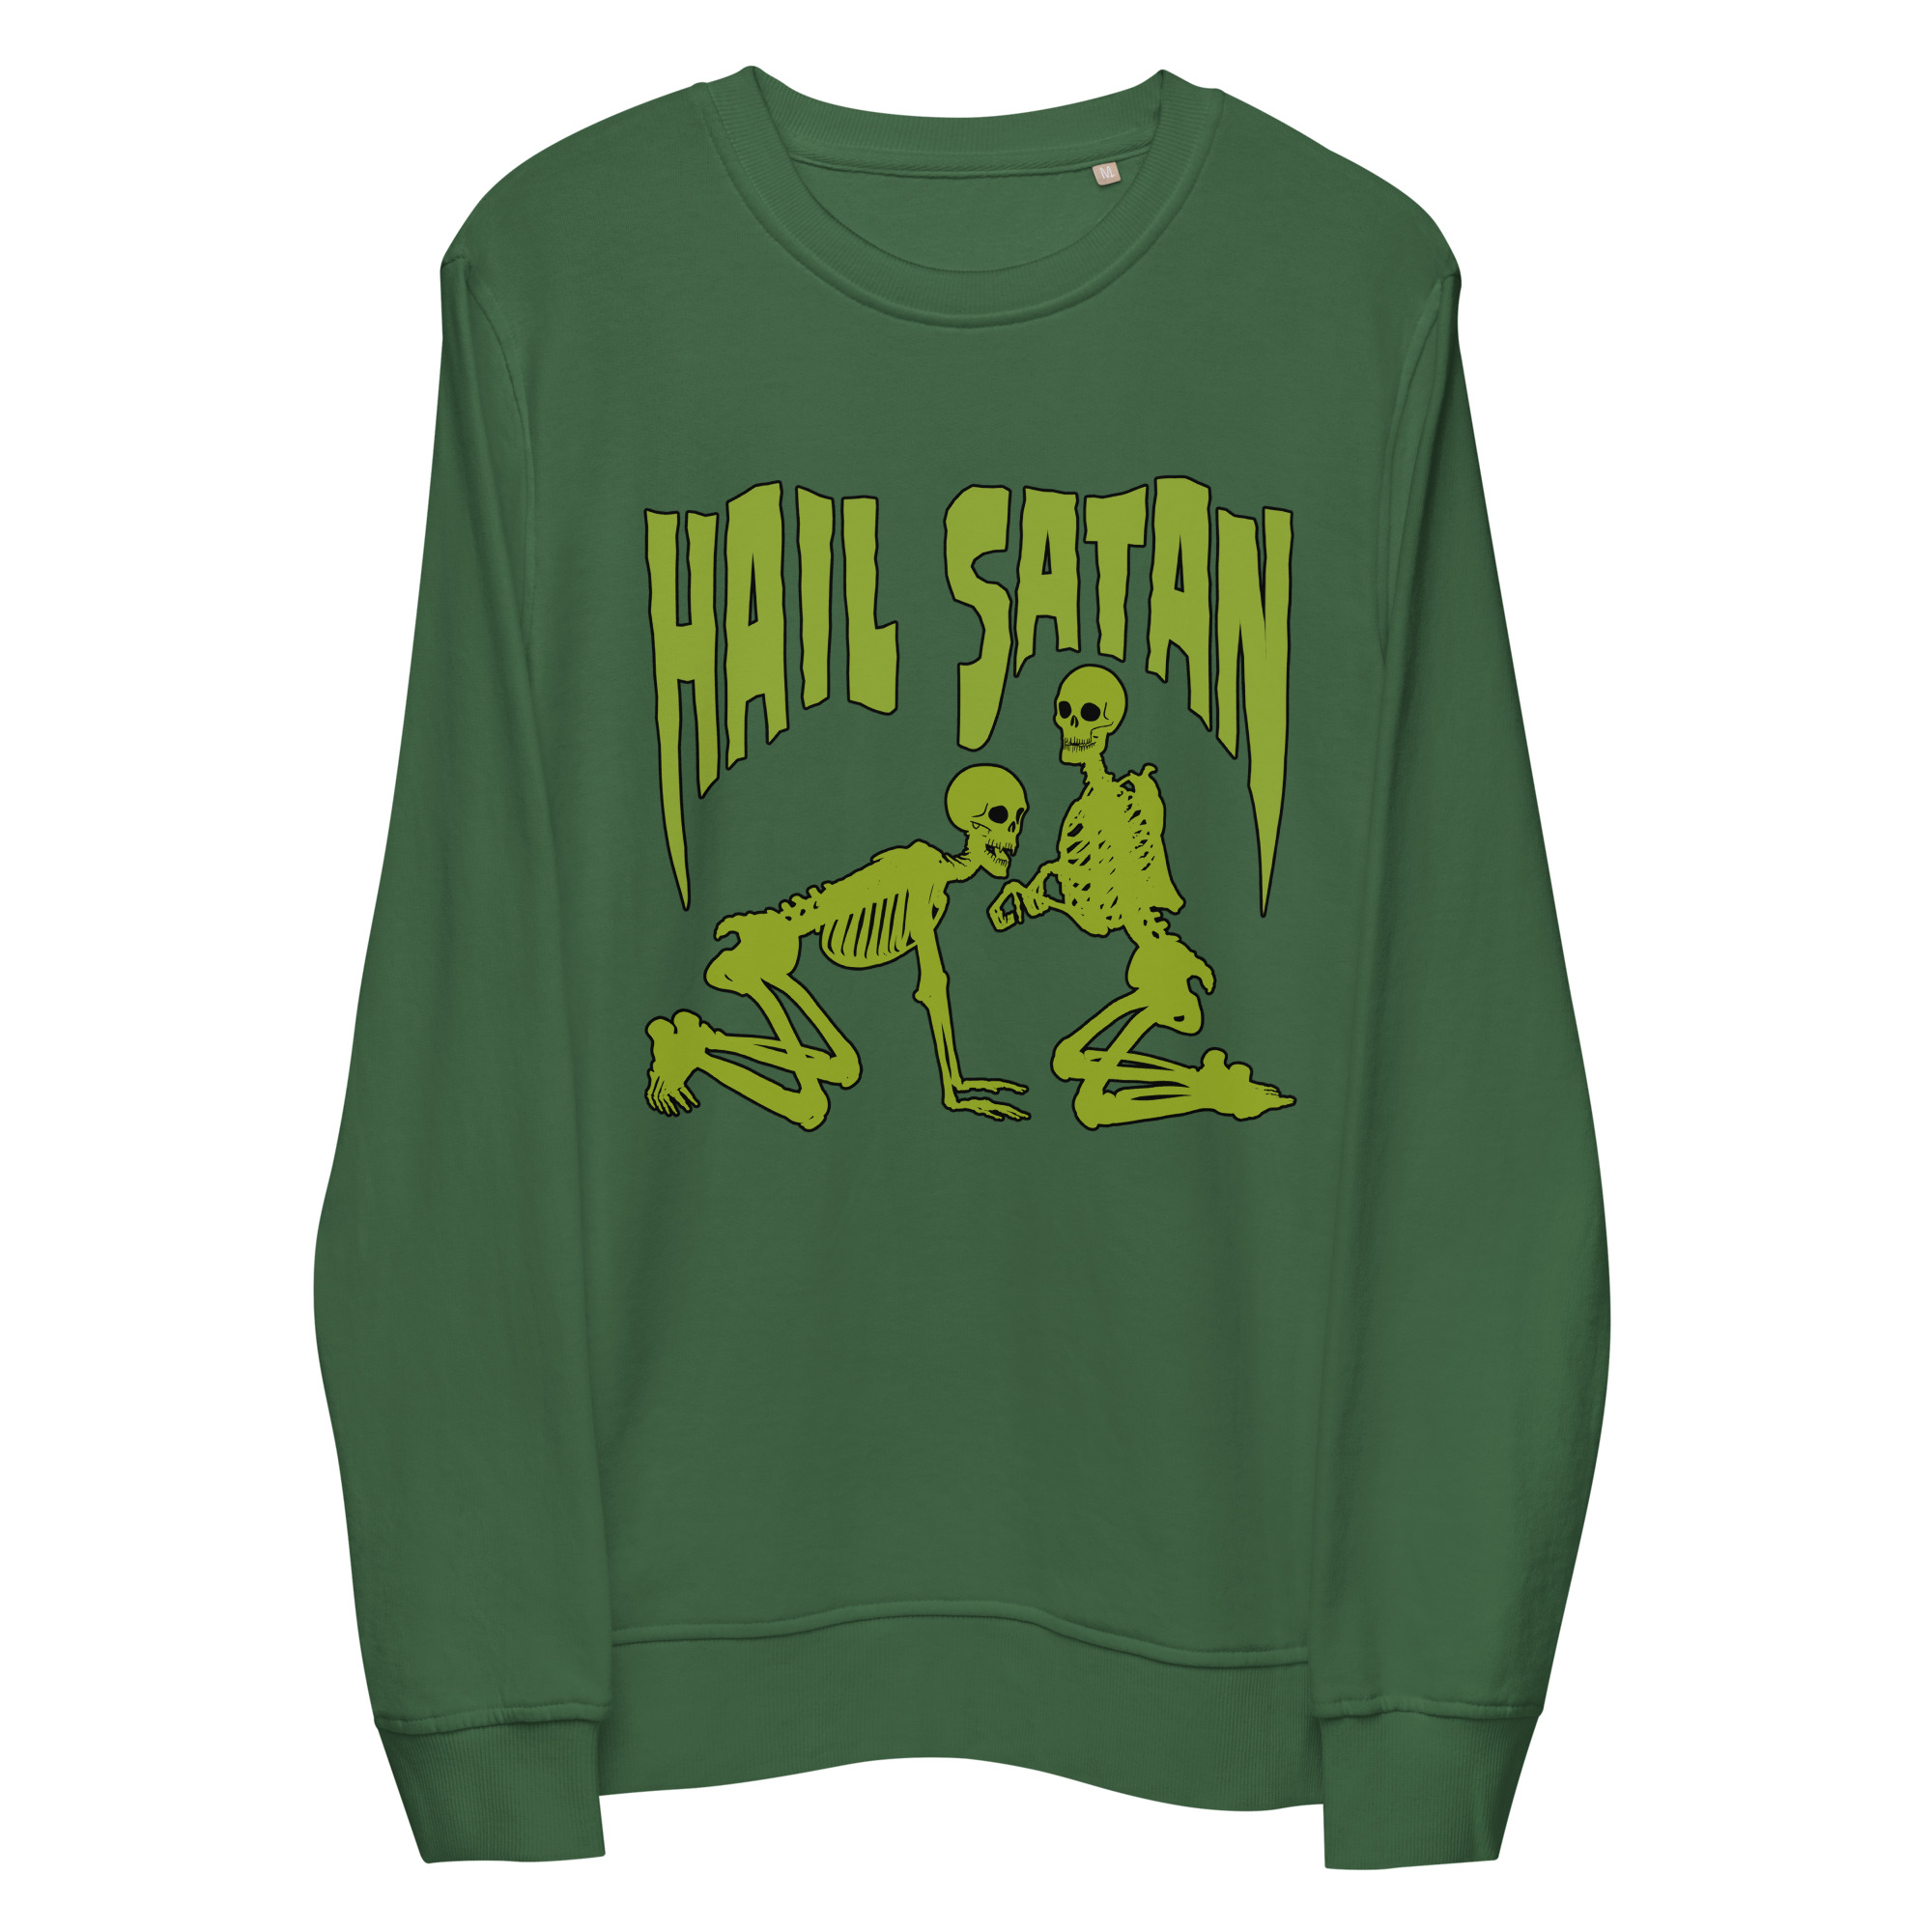 Featured image for “Hail Satan Skeletons - Unisex organic sweatshirt”